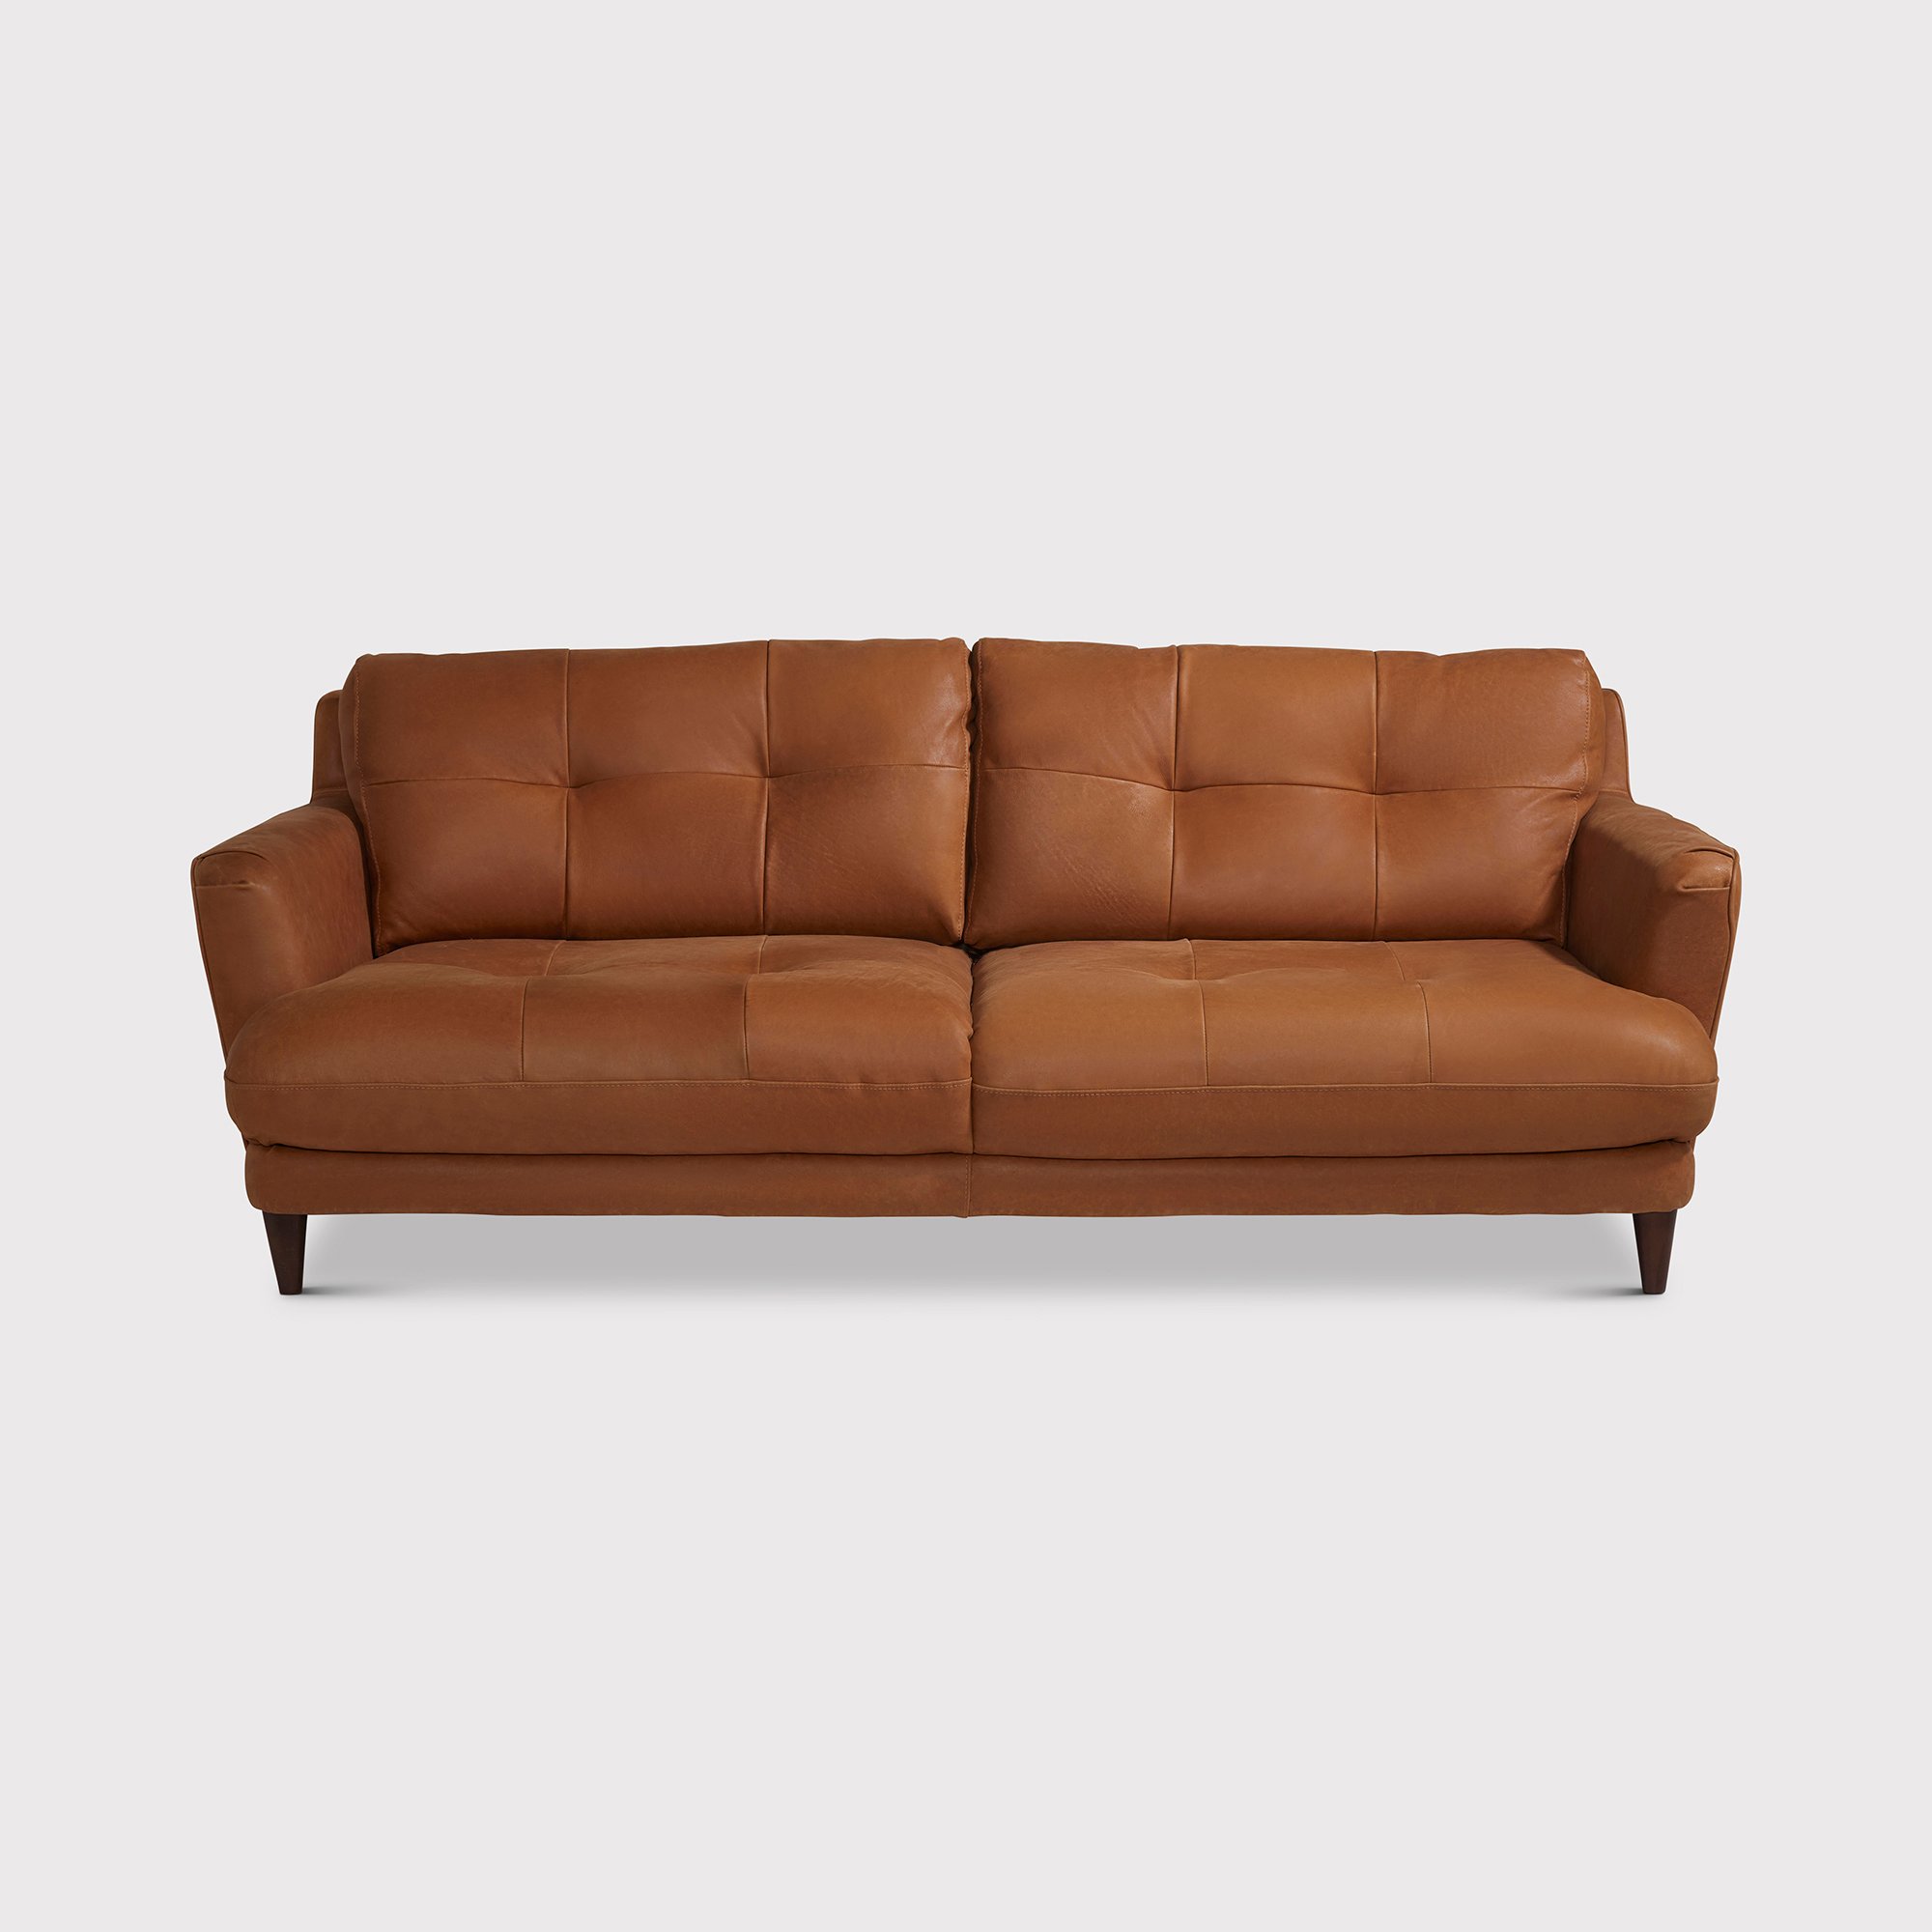 Aldo 3 Seater Sofa, Brown Leather | Barker & Stonehouse